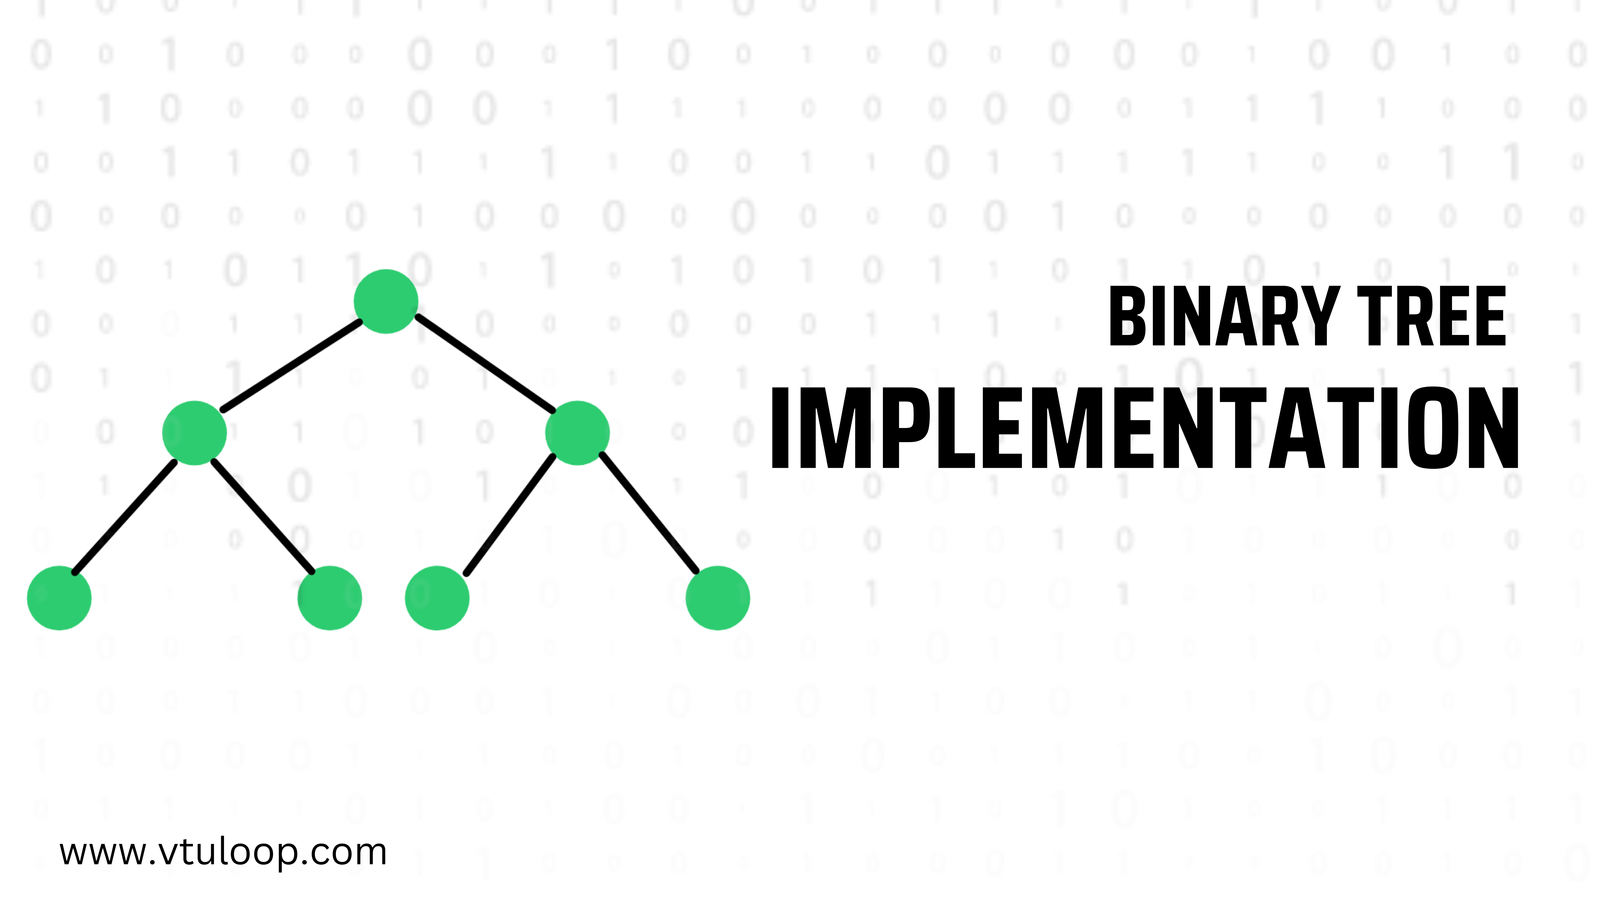 Binary tree implemenation